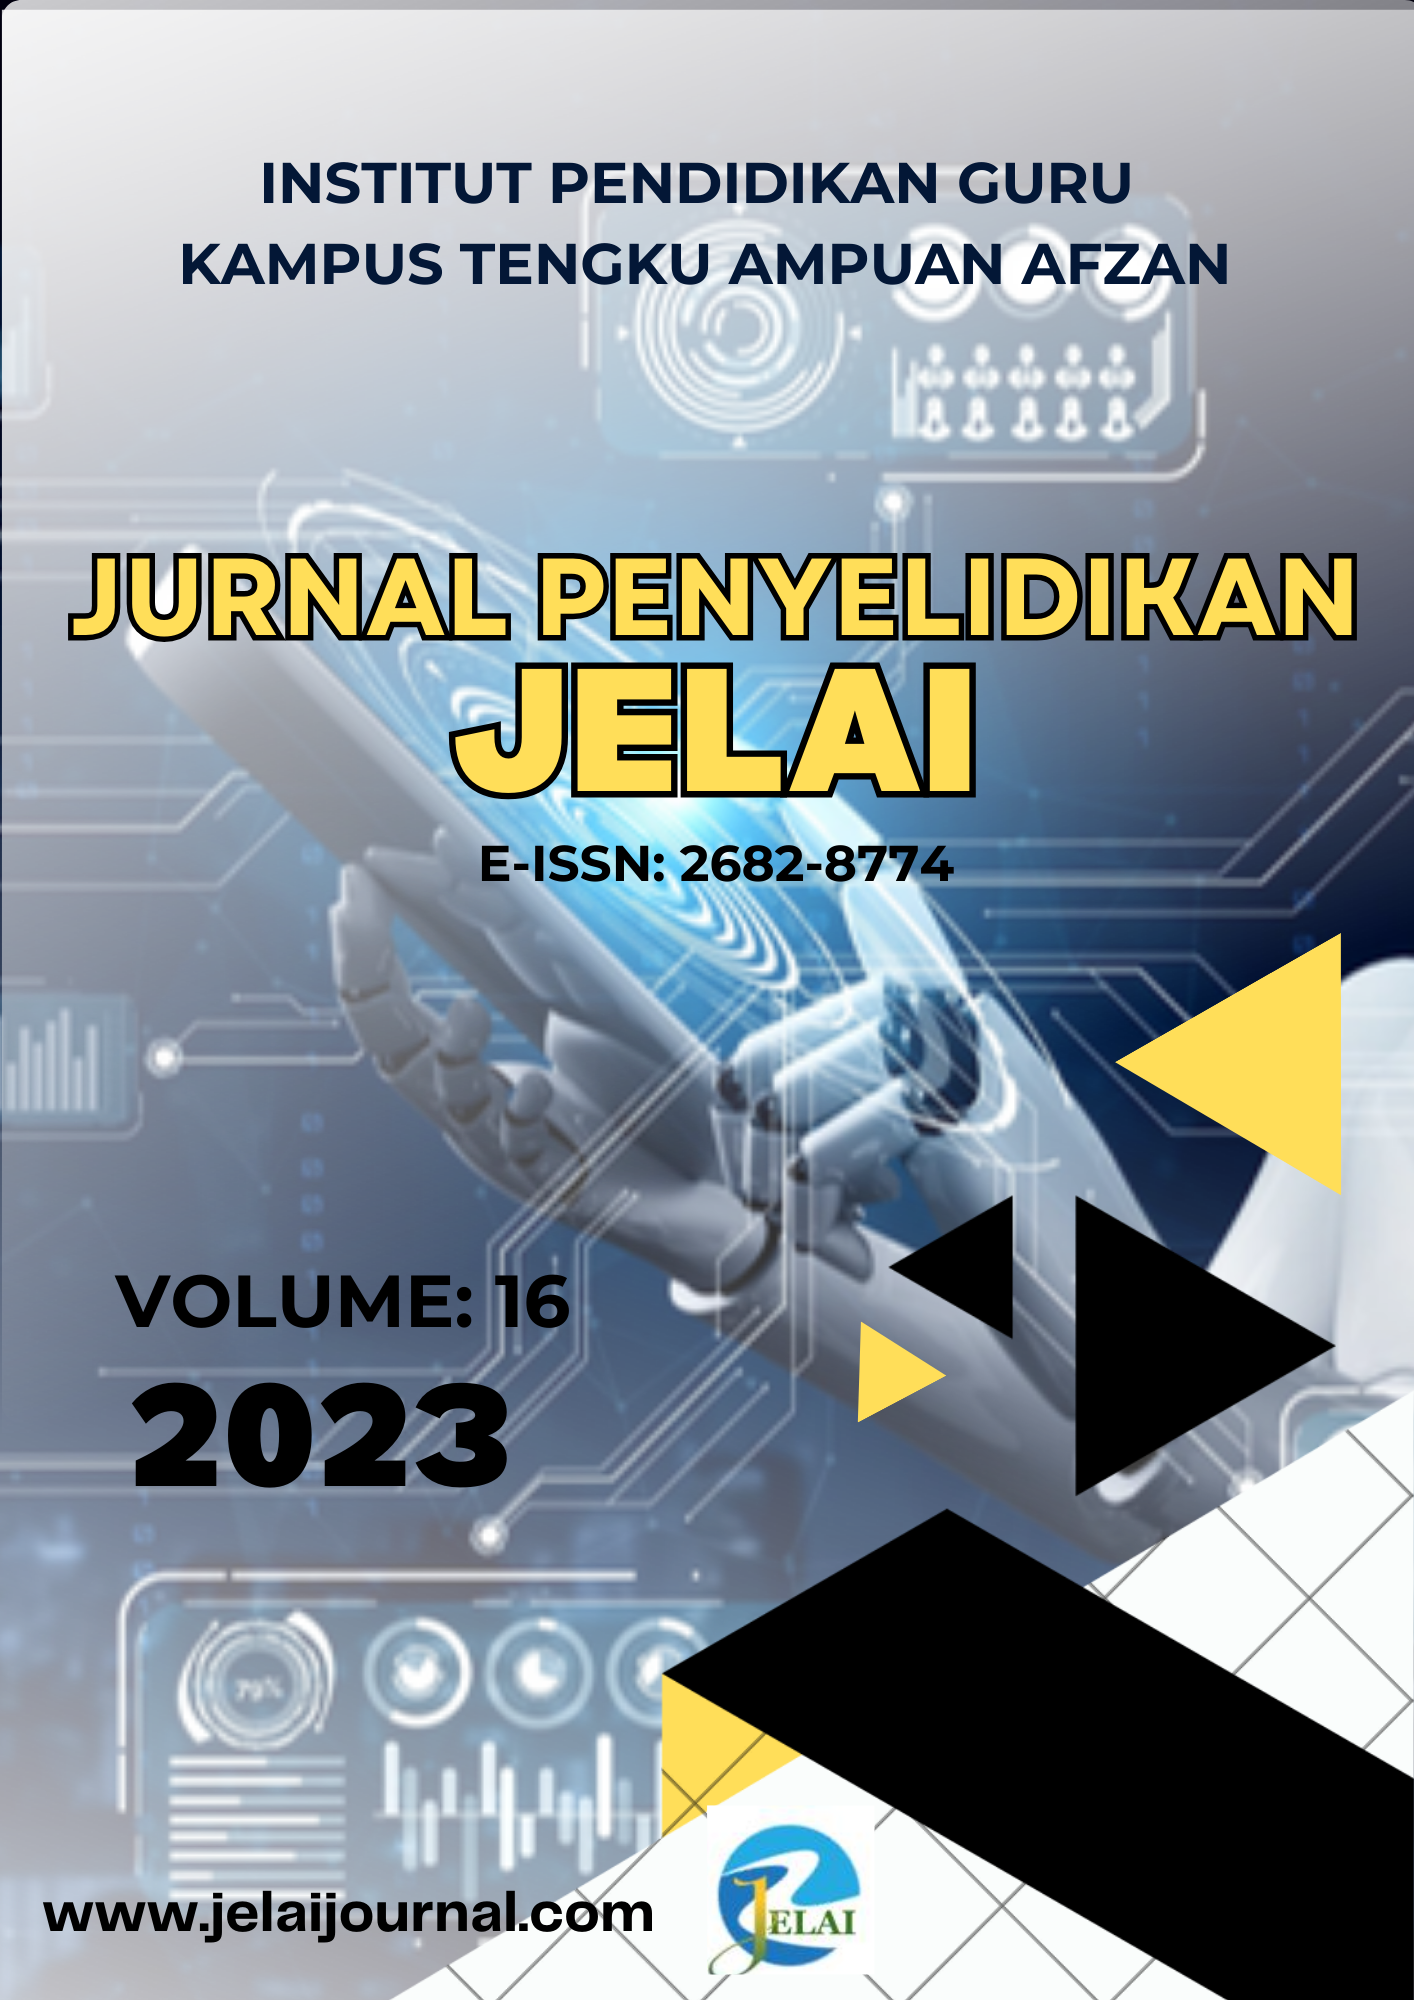 					View Vol. 16 No. 1 (2023): Jurnal Penyelidikan Jelai
				